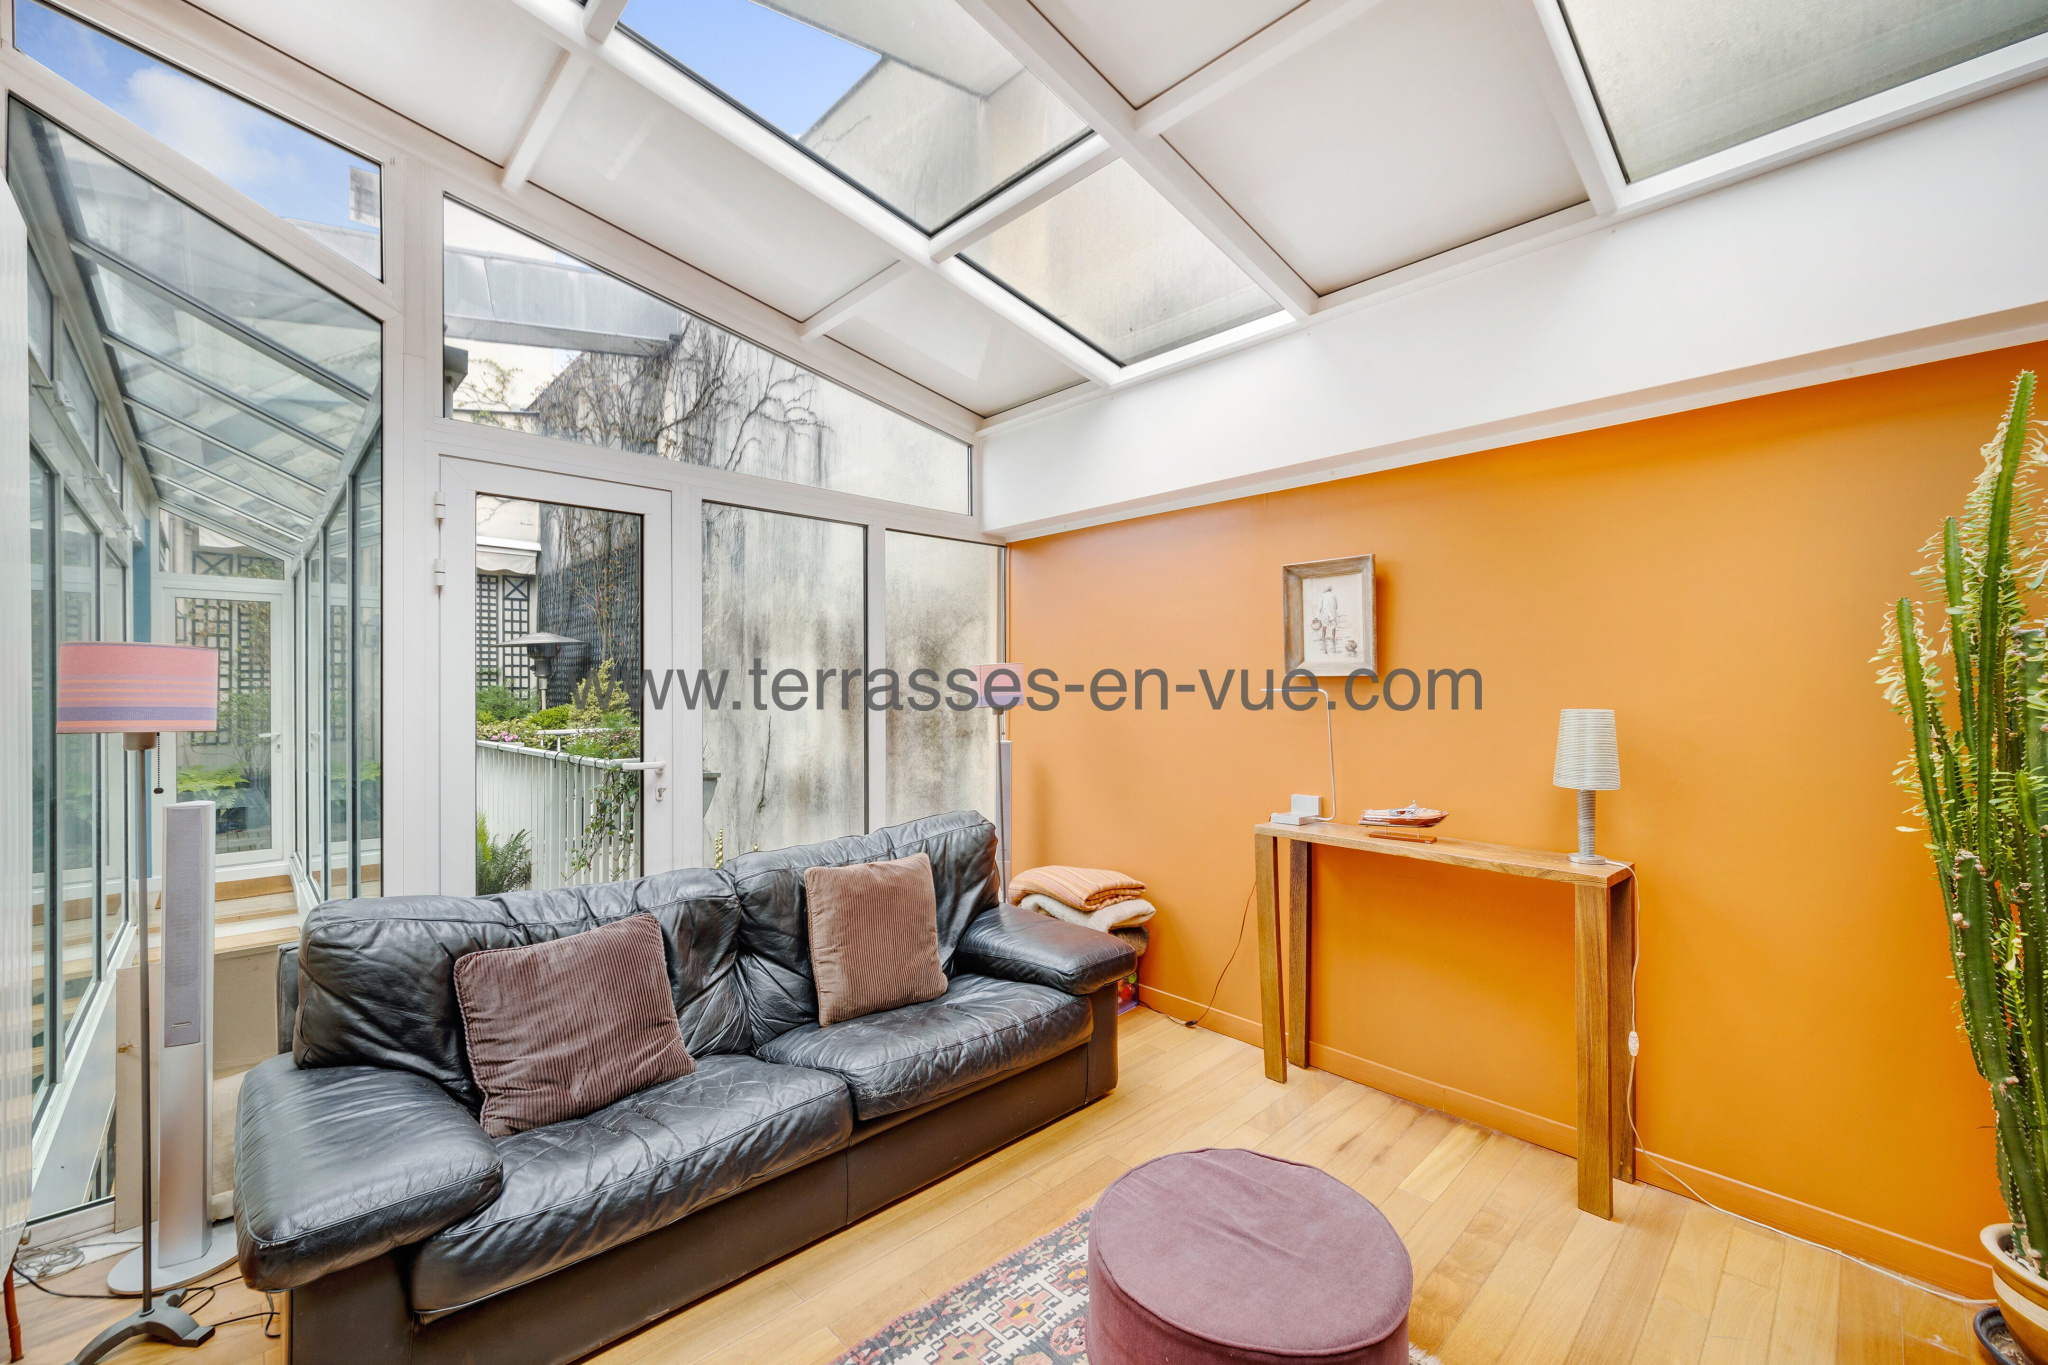 Apartment for sale - Paris / 75017